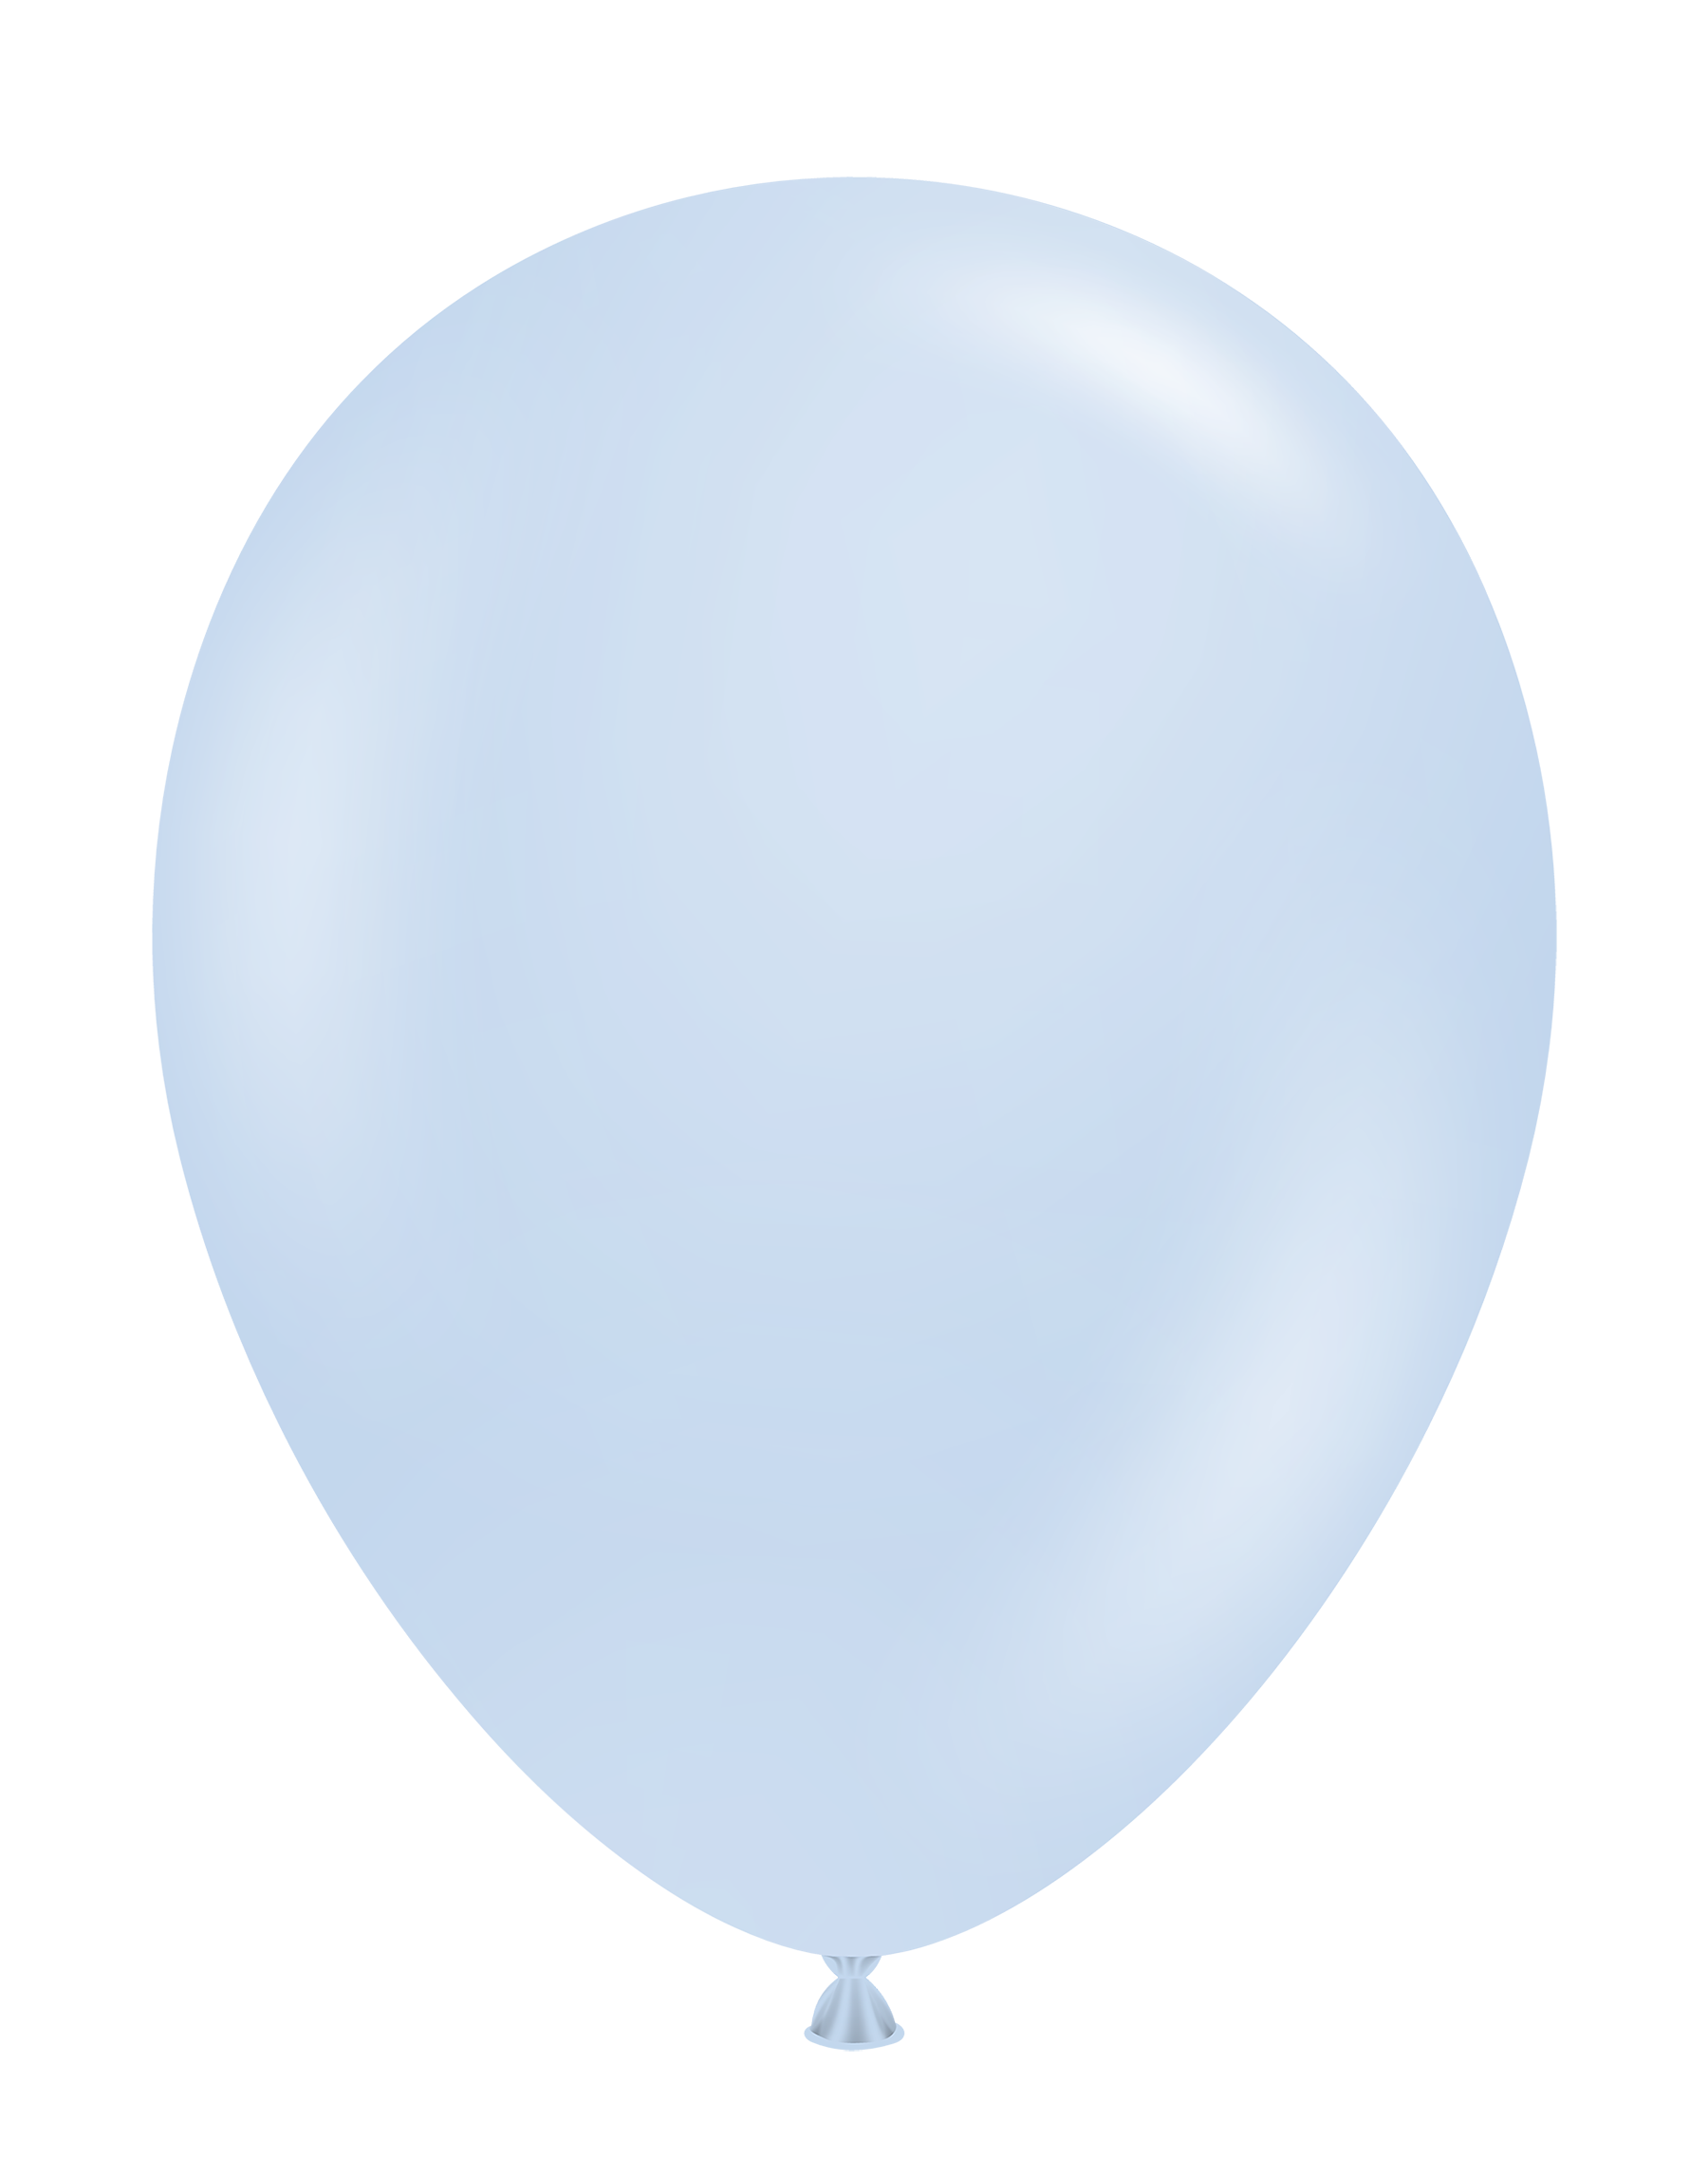 5" TUFTEX Monet - Baby Blue Latex Balloons | 50 Count